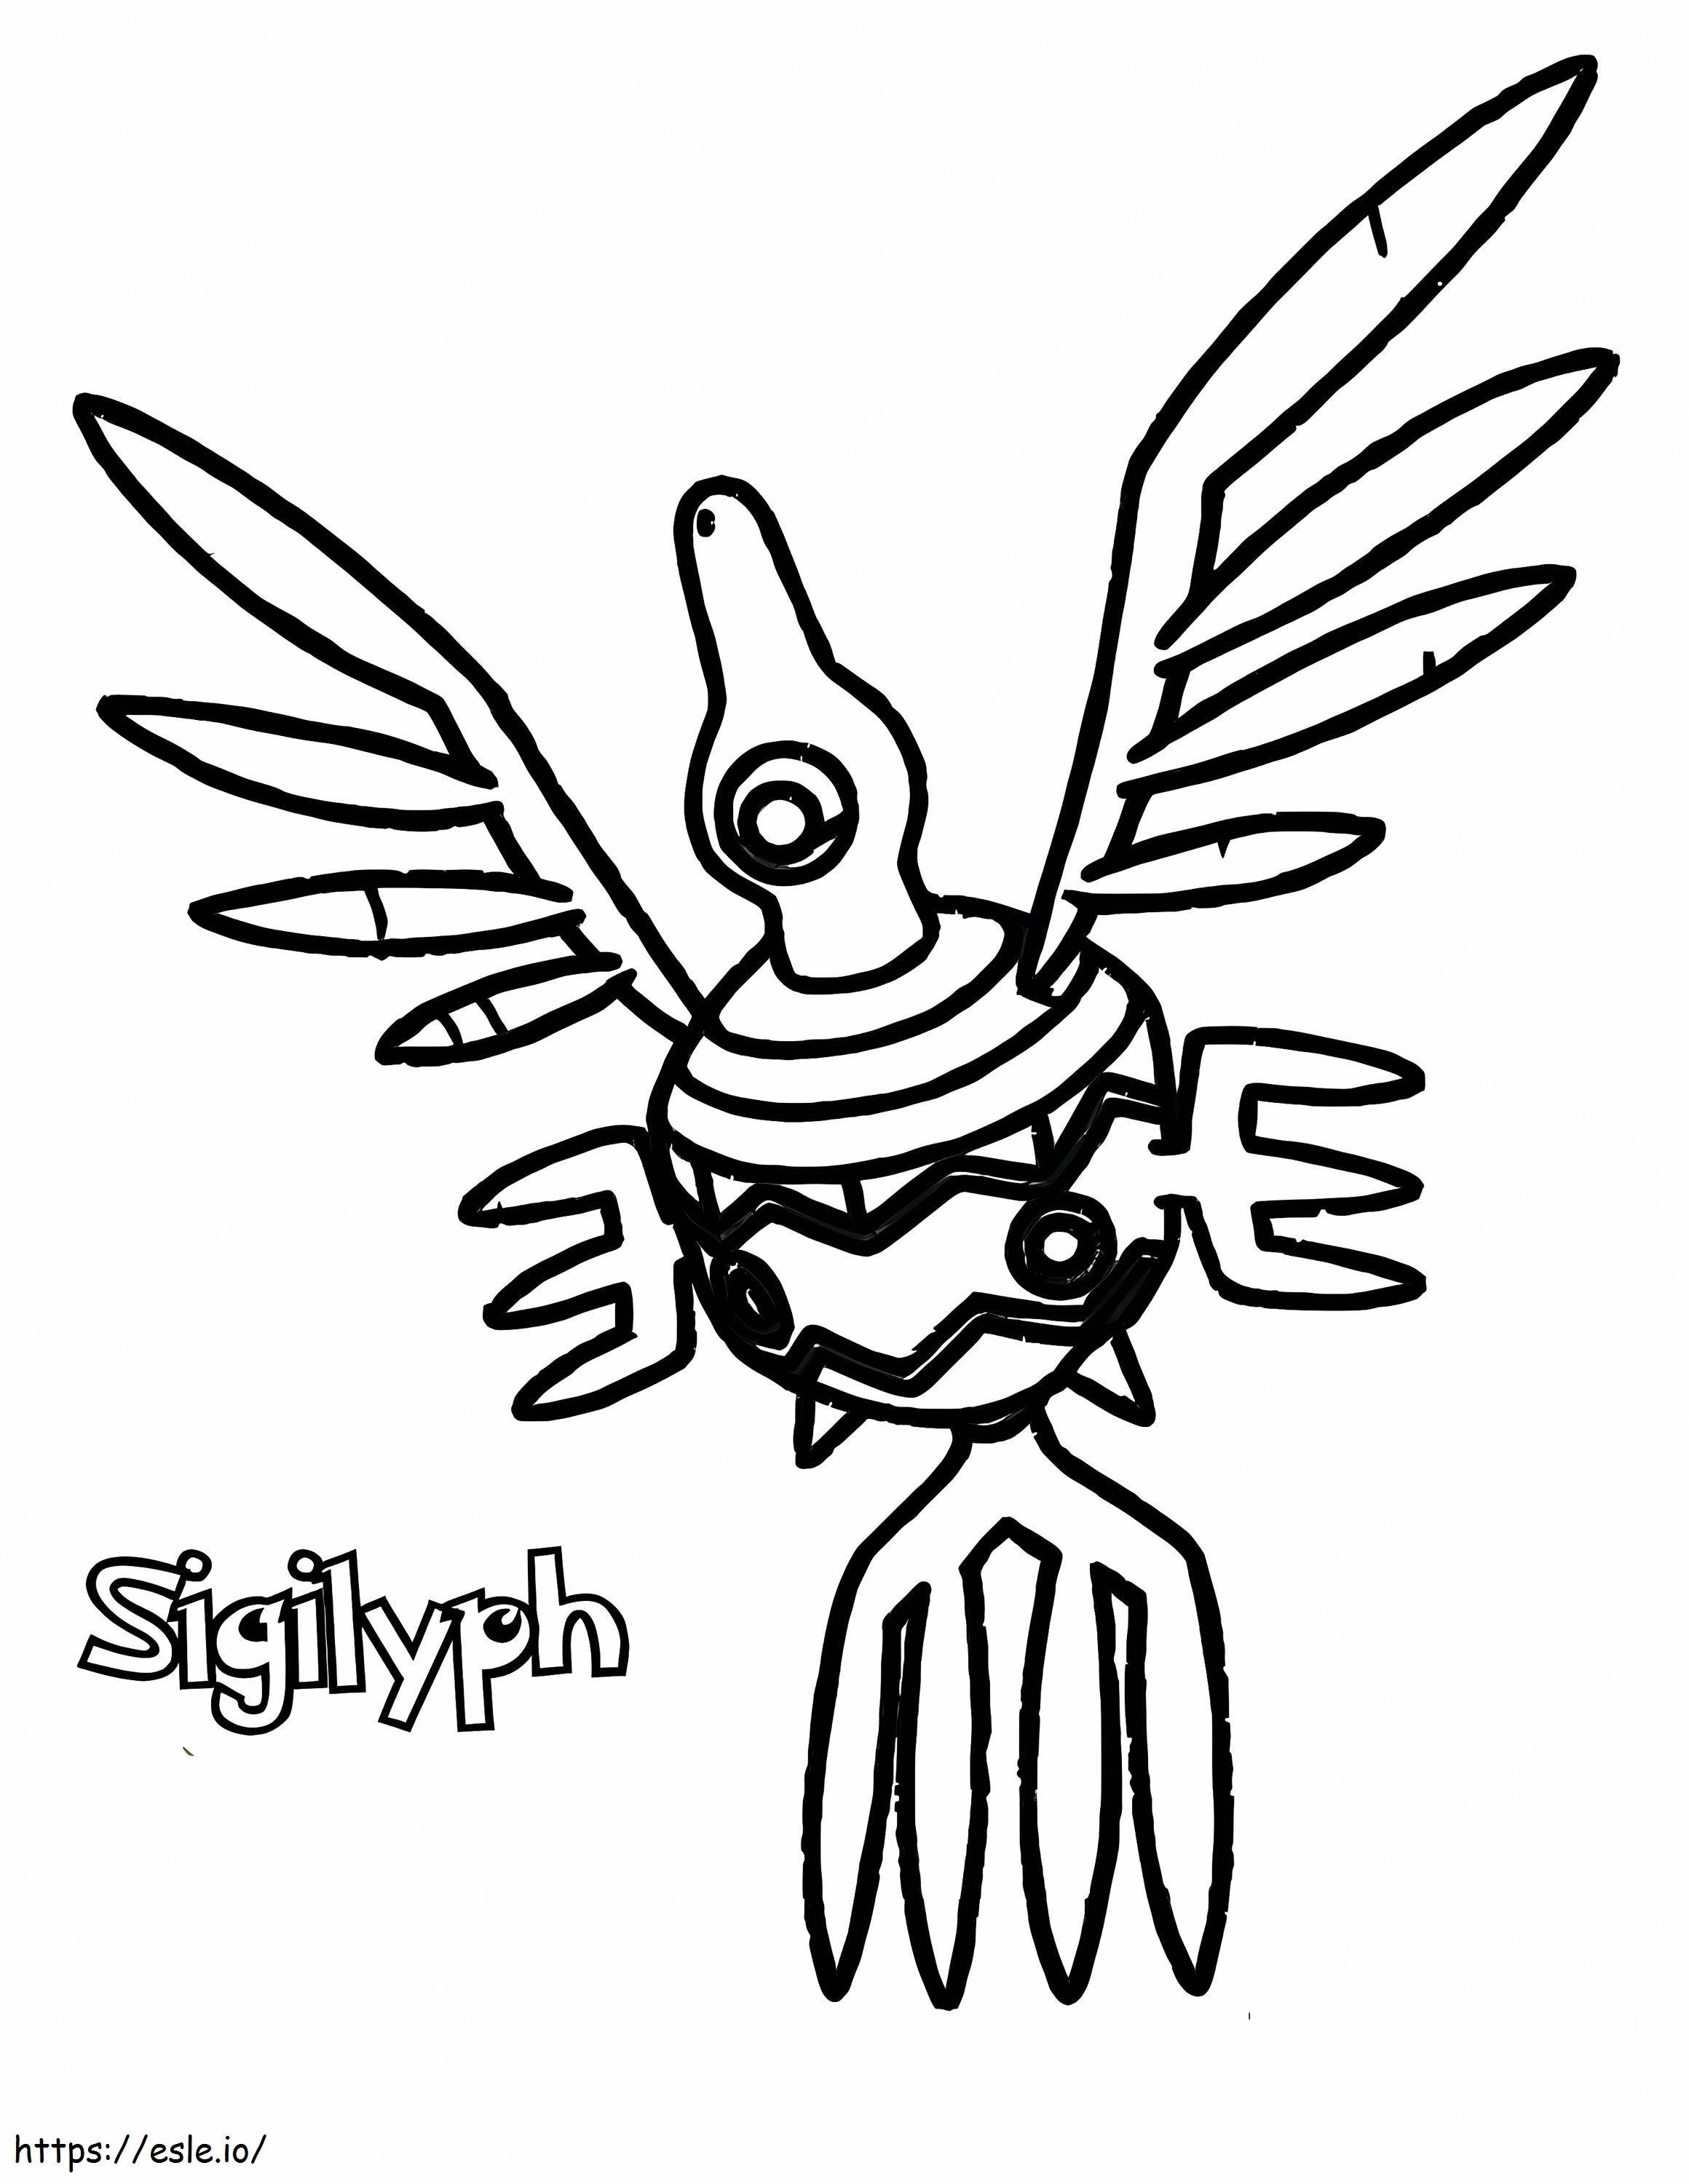 Sigilyph-Pokémon ausmalbilder